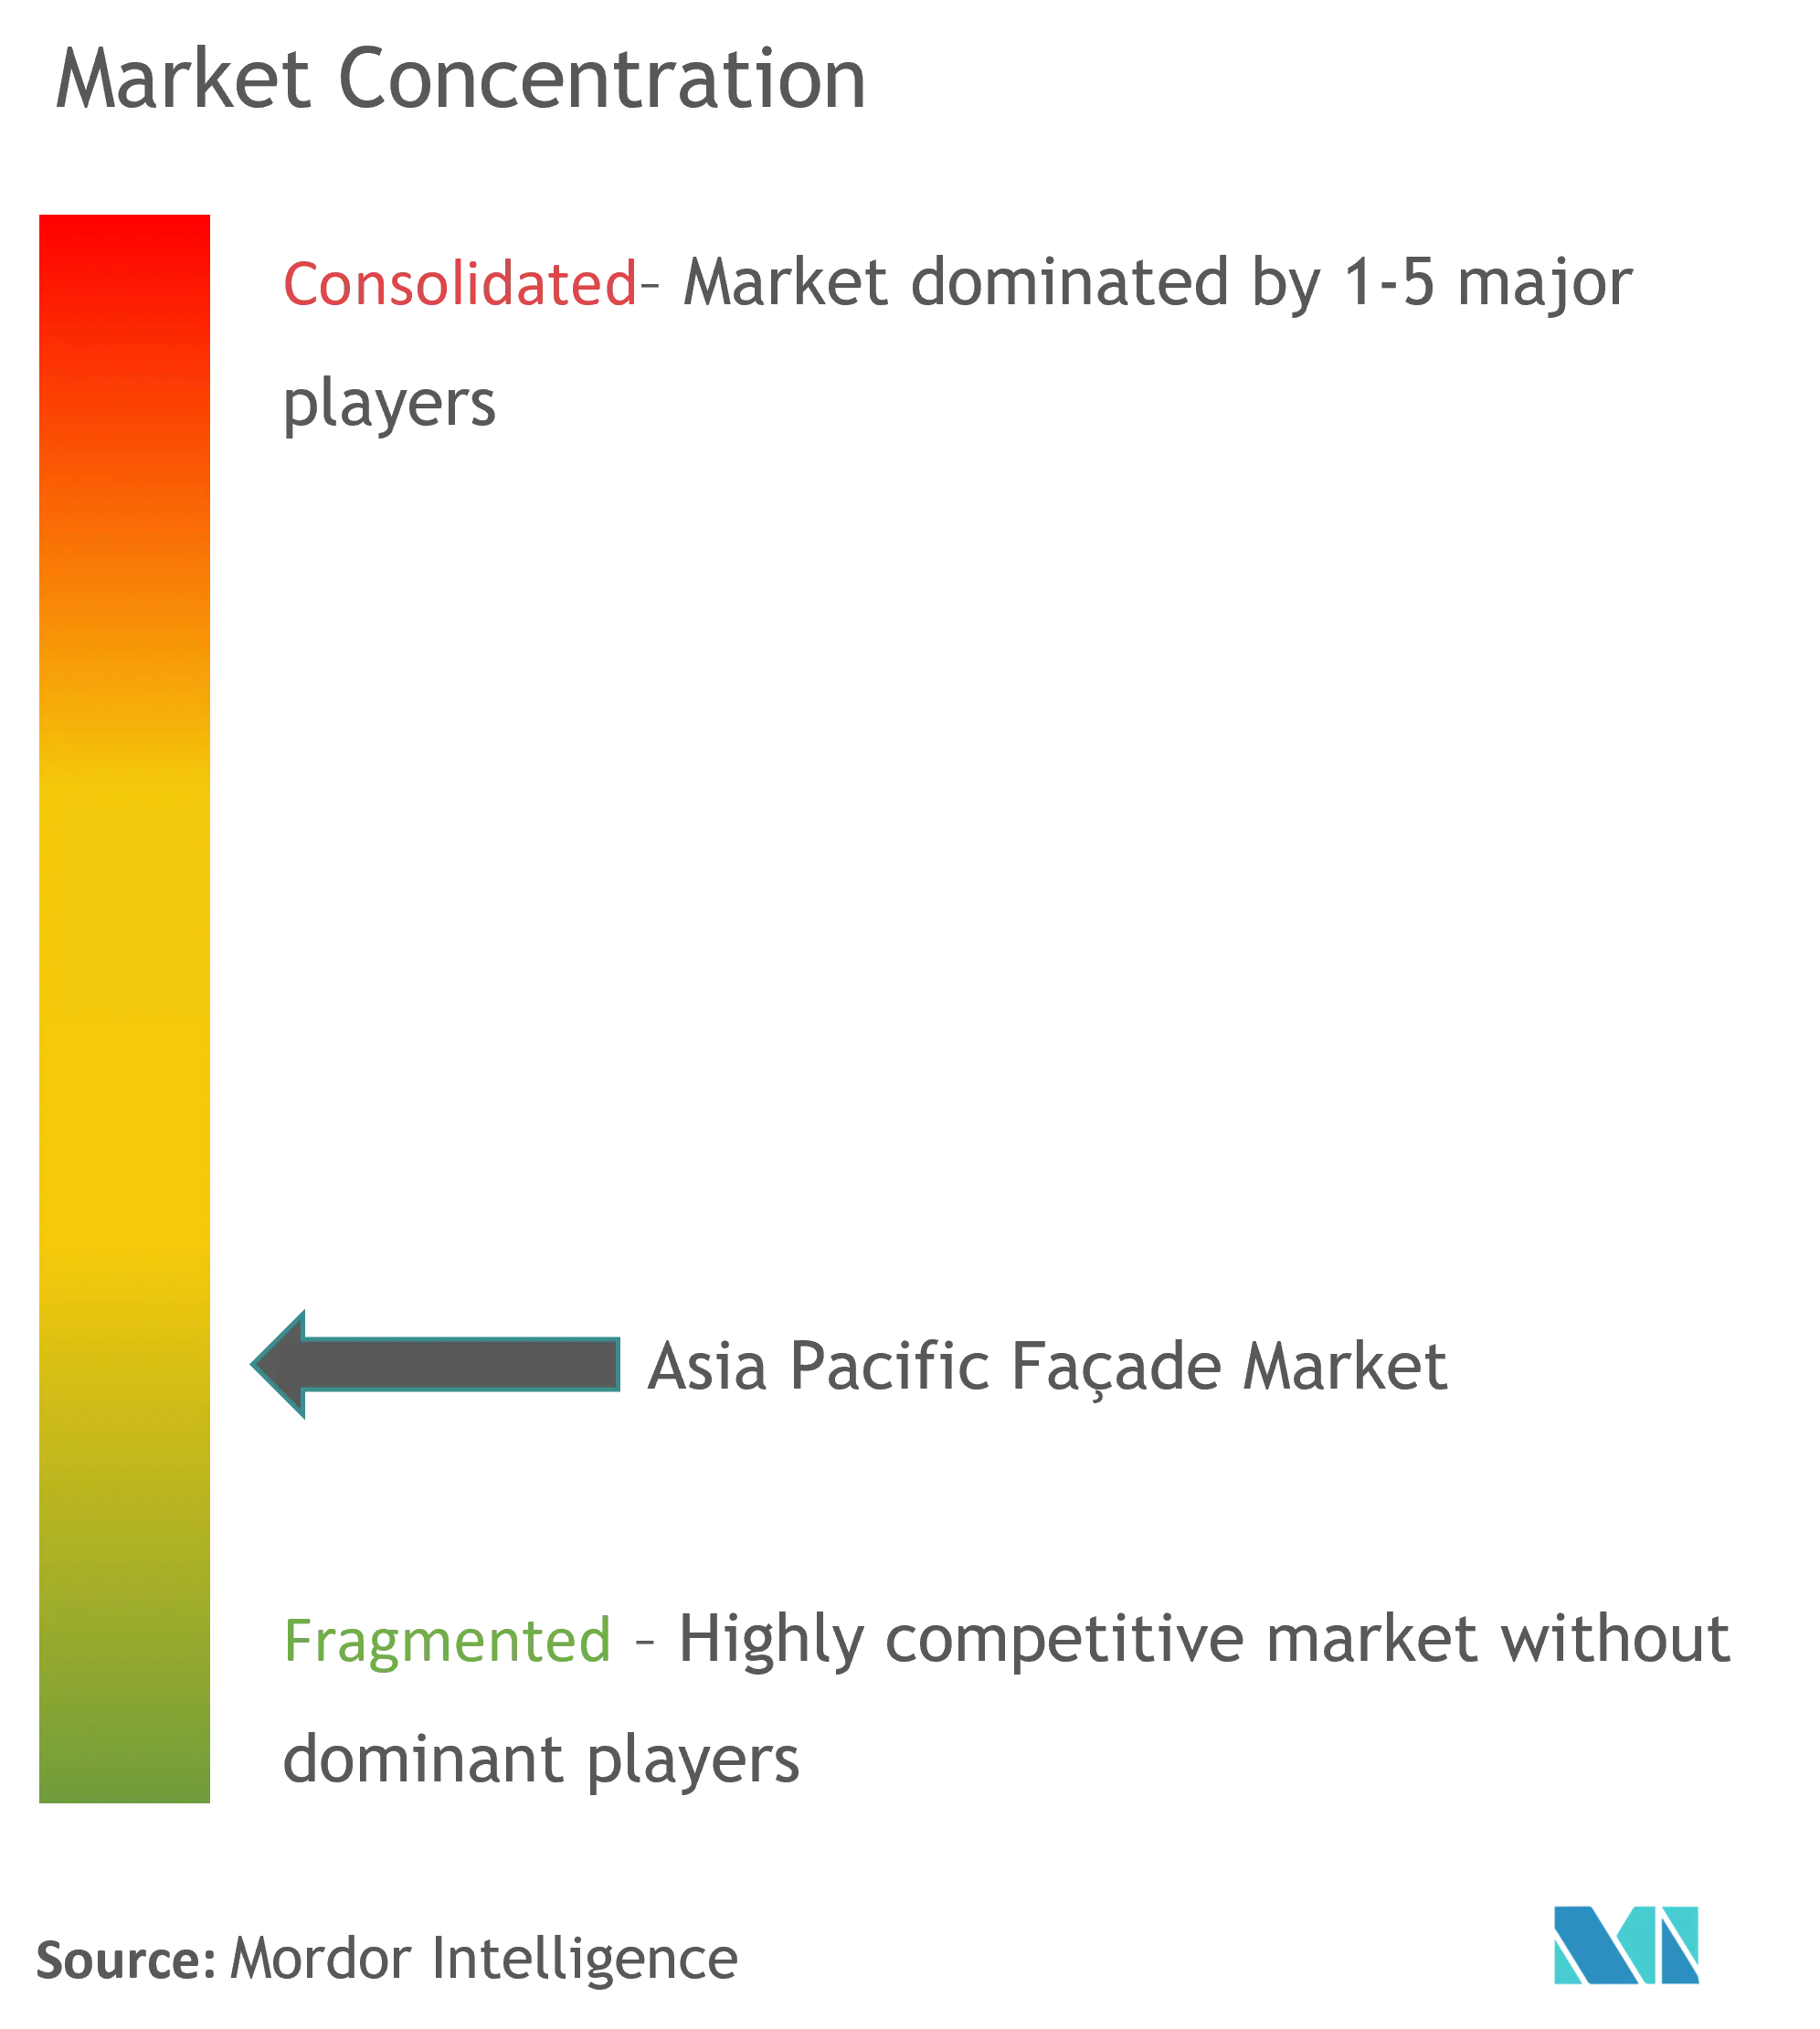 Asia-Pacific Facade Market Concentration